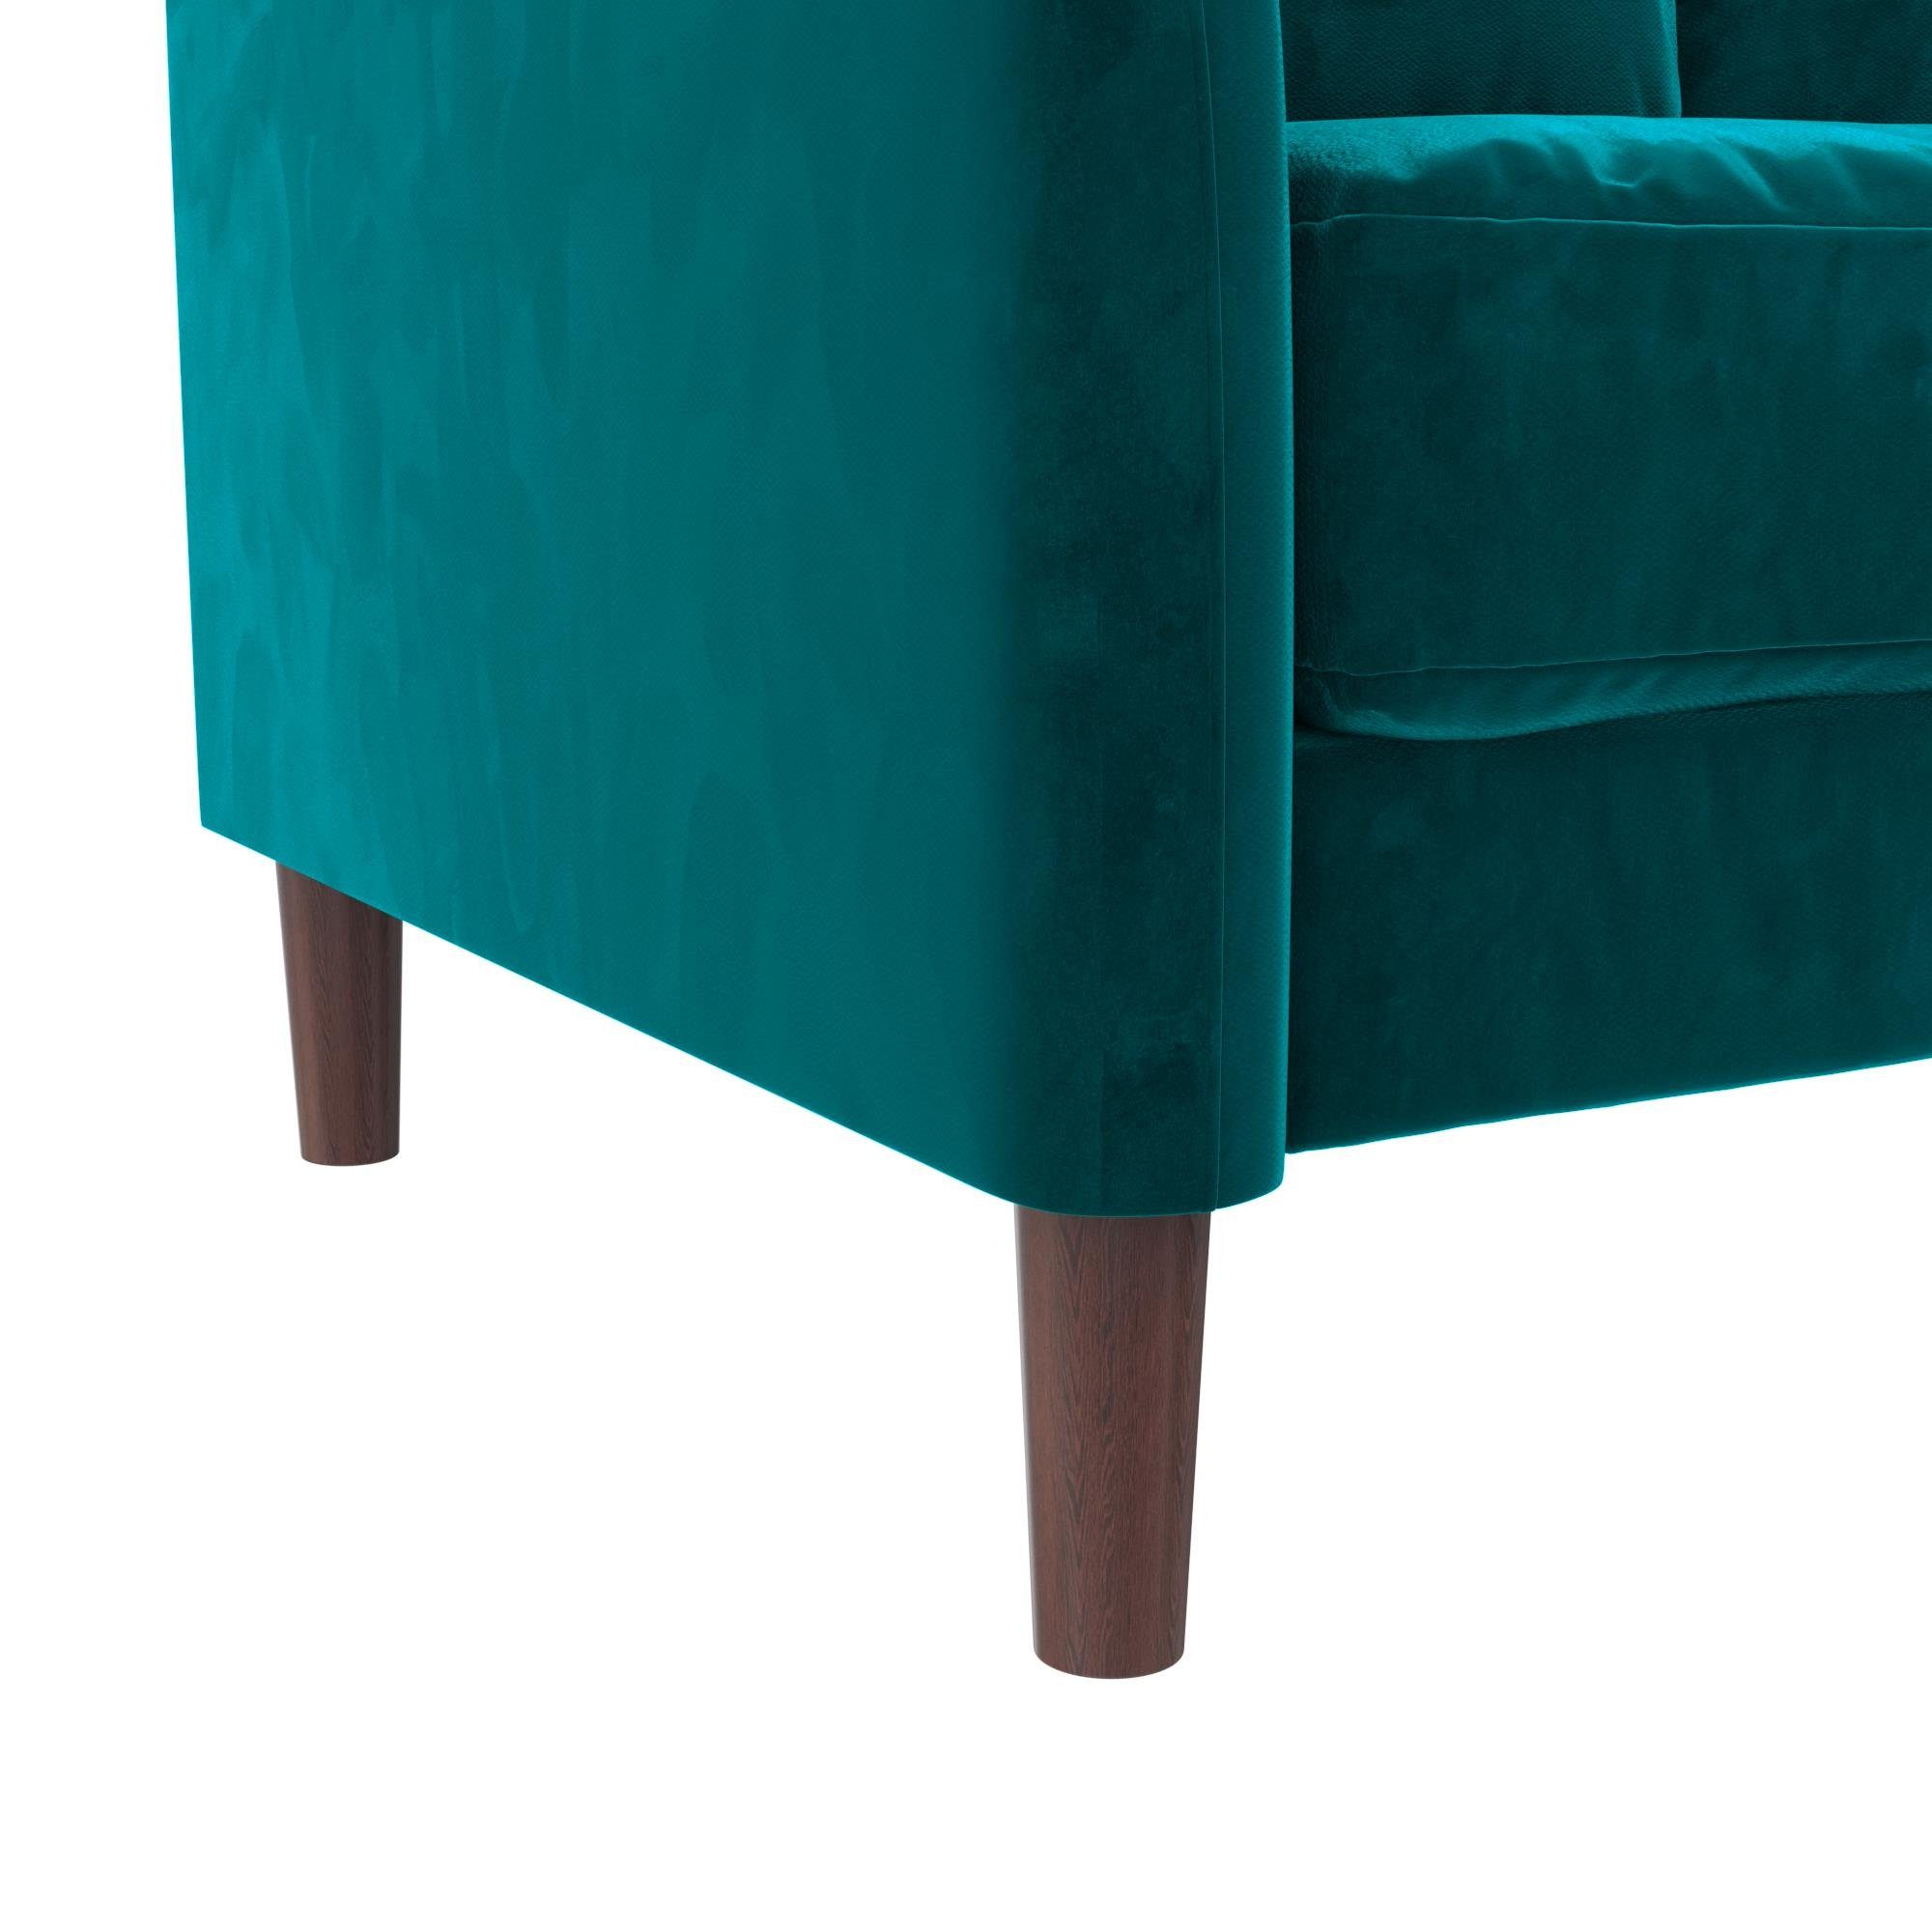 loft24 Sofa Marbella, Couch, Samtoptik, 3-Sitzer, Bezug Länge 188 cm grün in